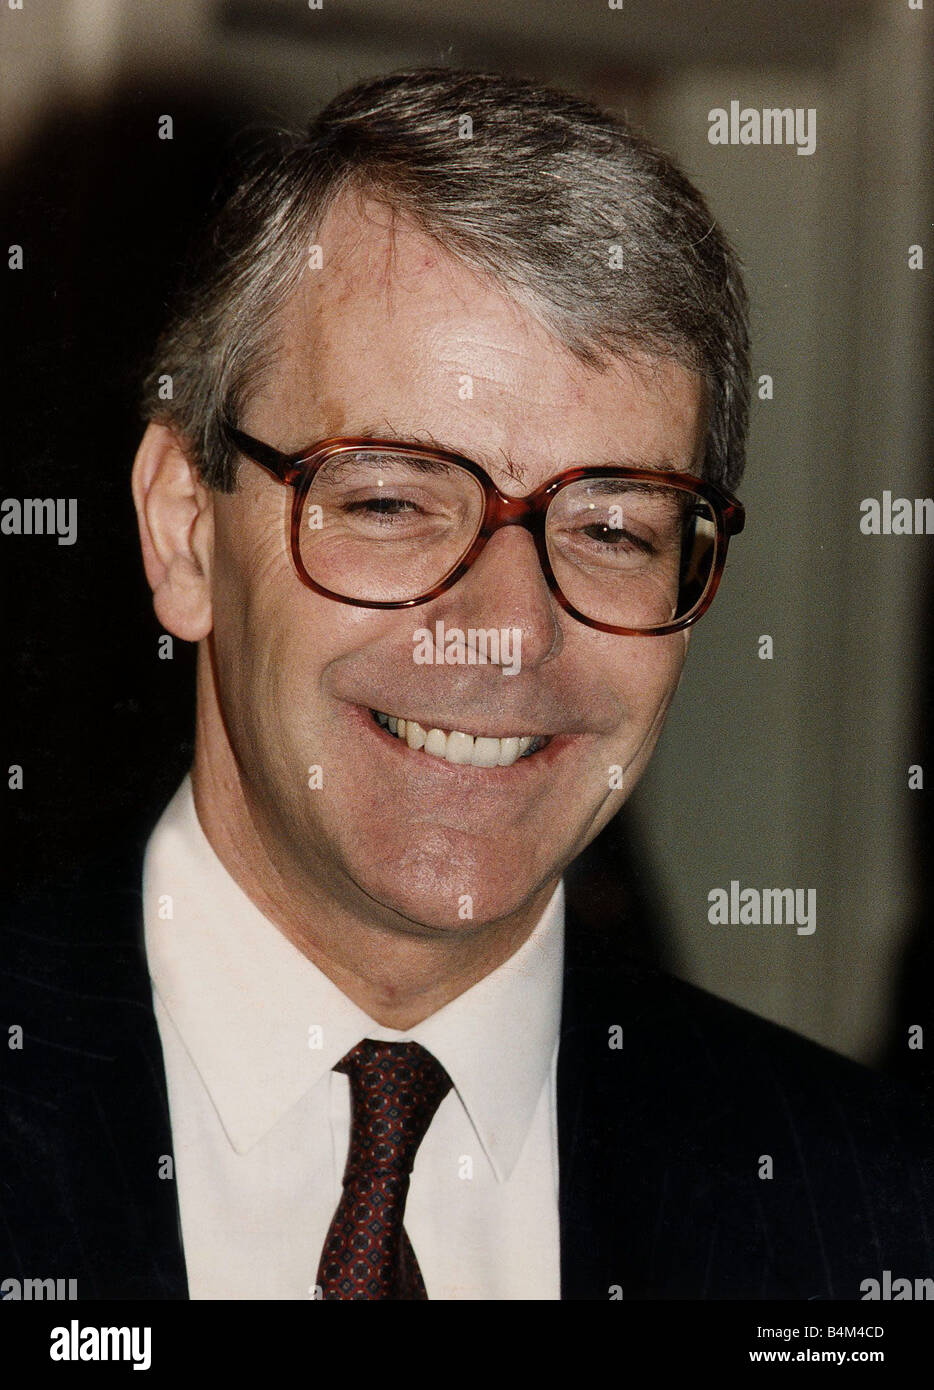 John Major Prime Minister of Great Britain circa 1993 Stock Photo